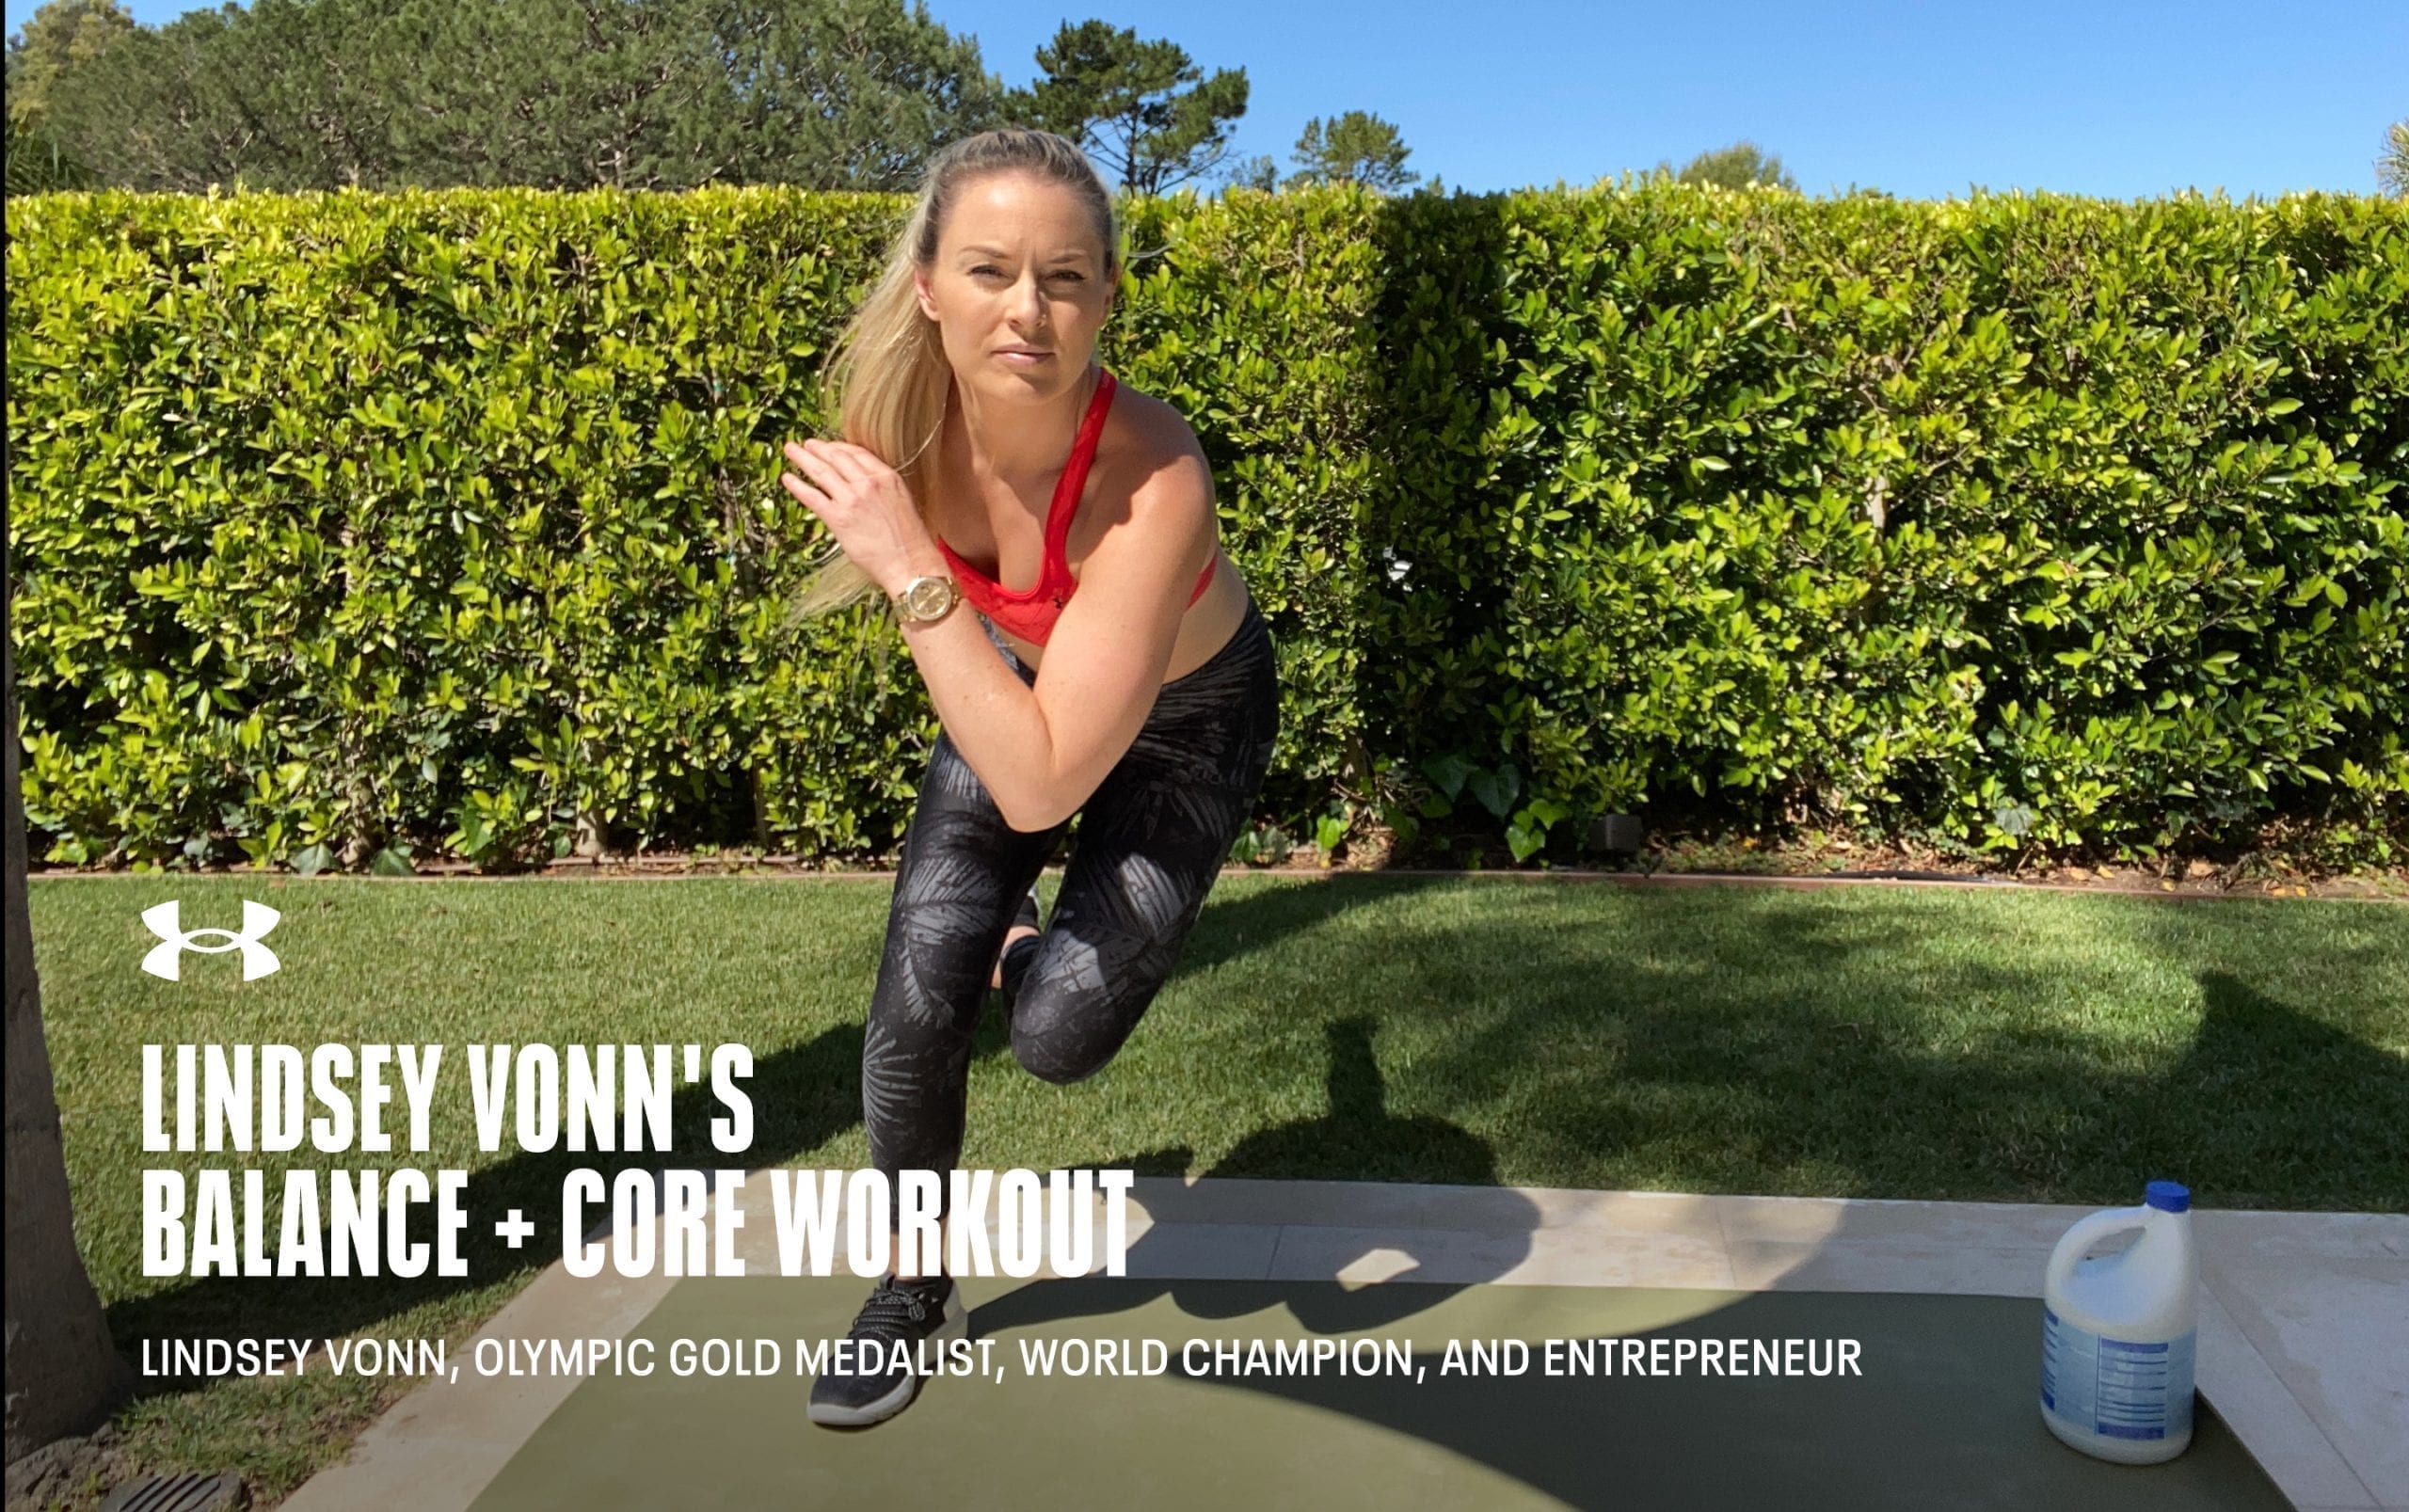 Lindsey Vonn’s Balance + Core Workout